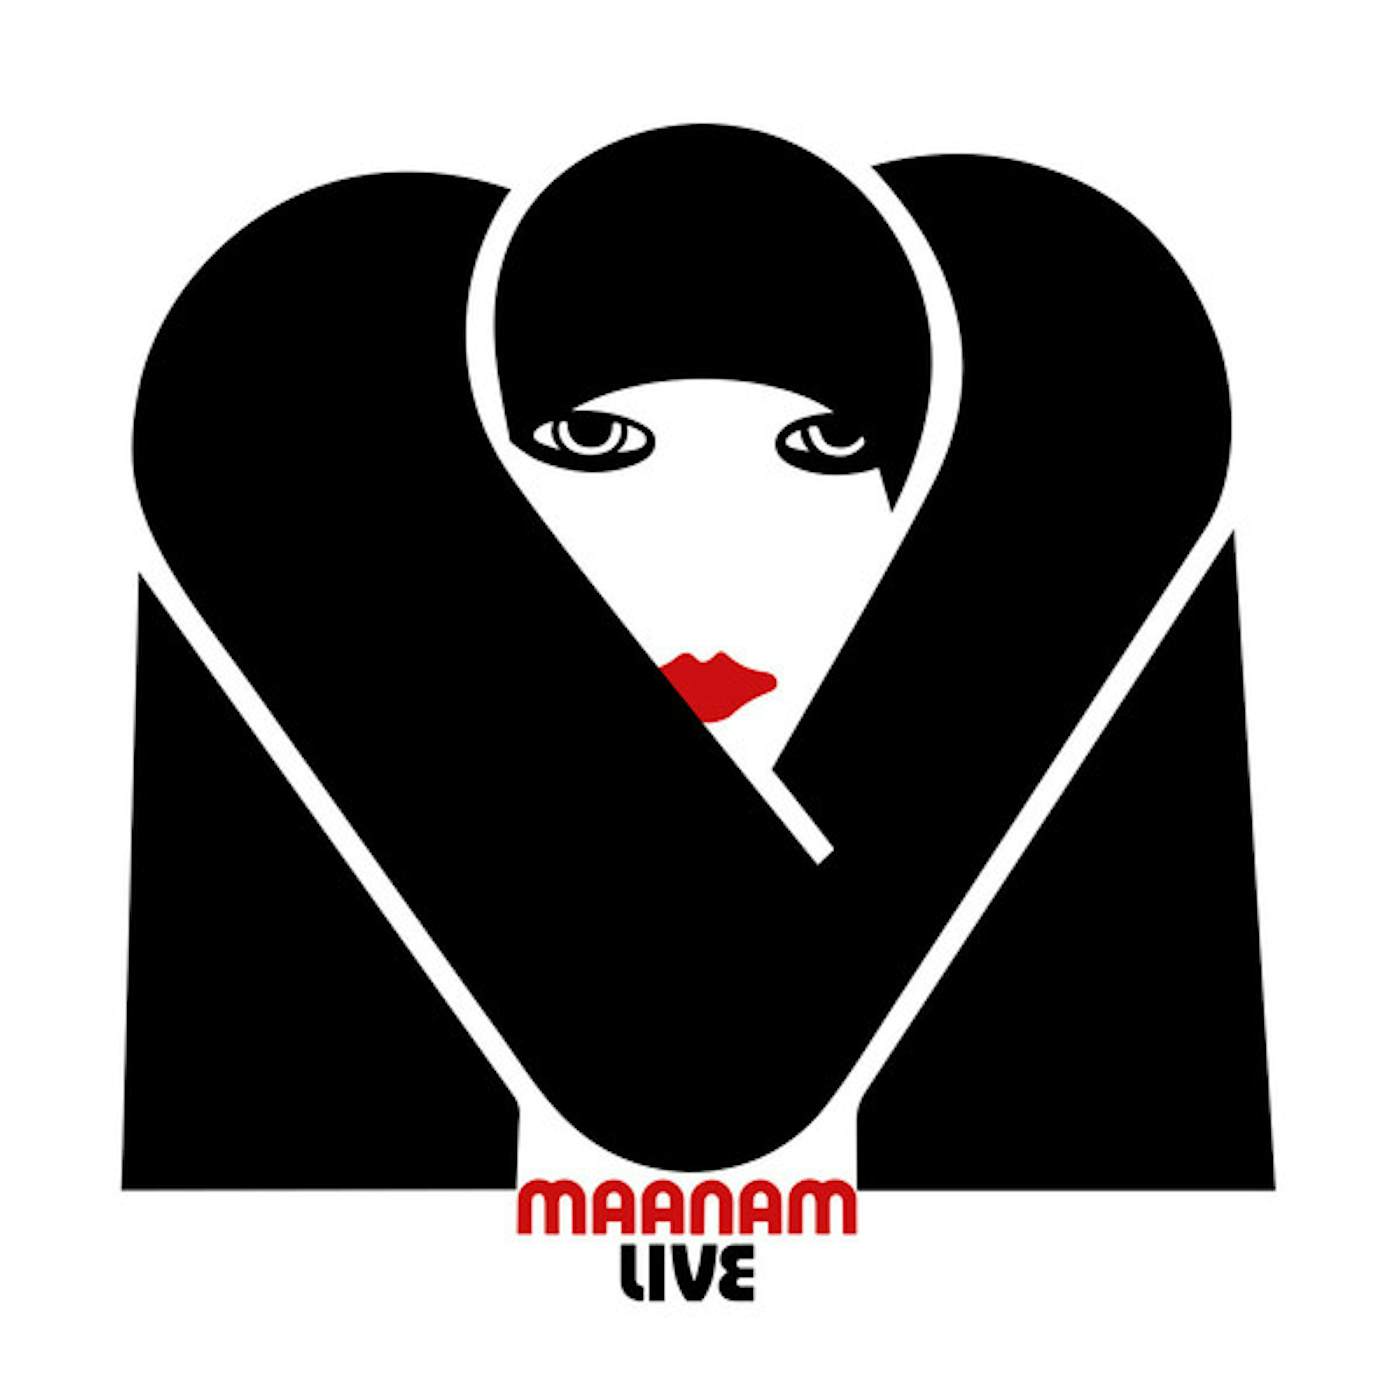 Maanam Live / Kminek Dla Dziewczynek Vinyl Record